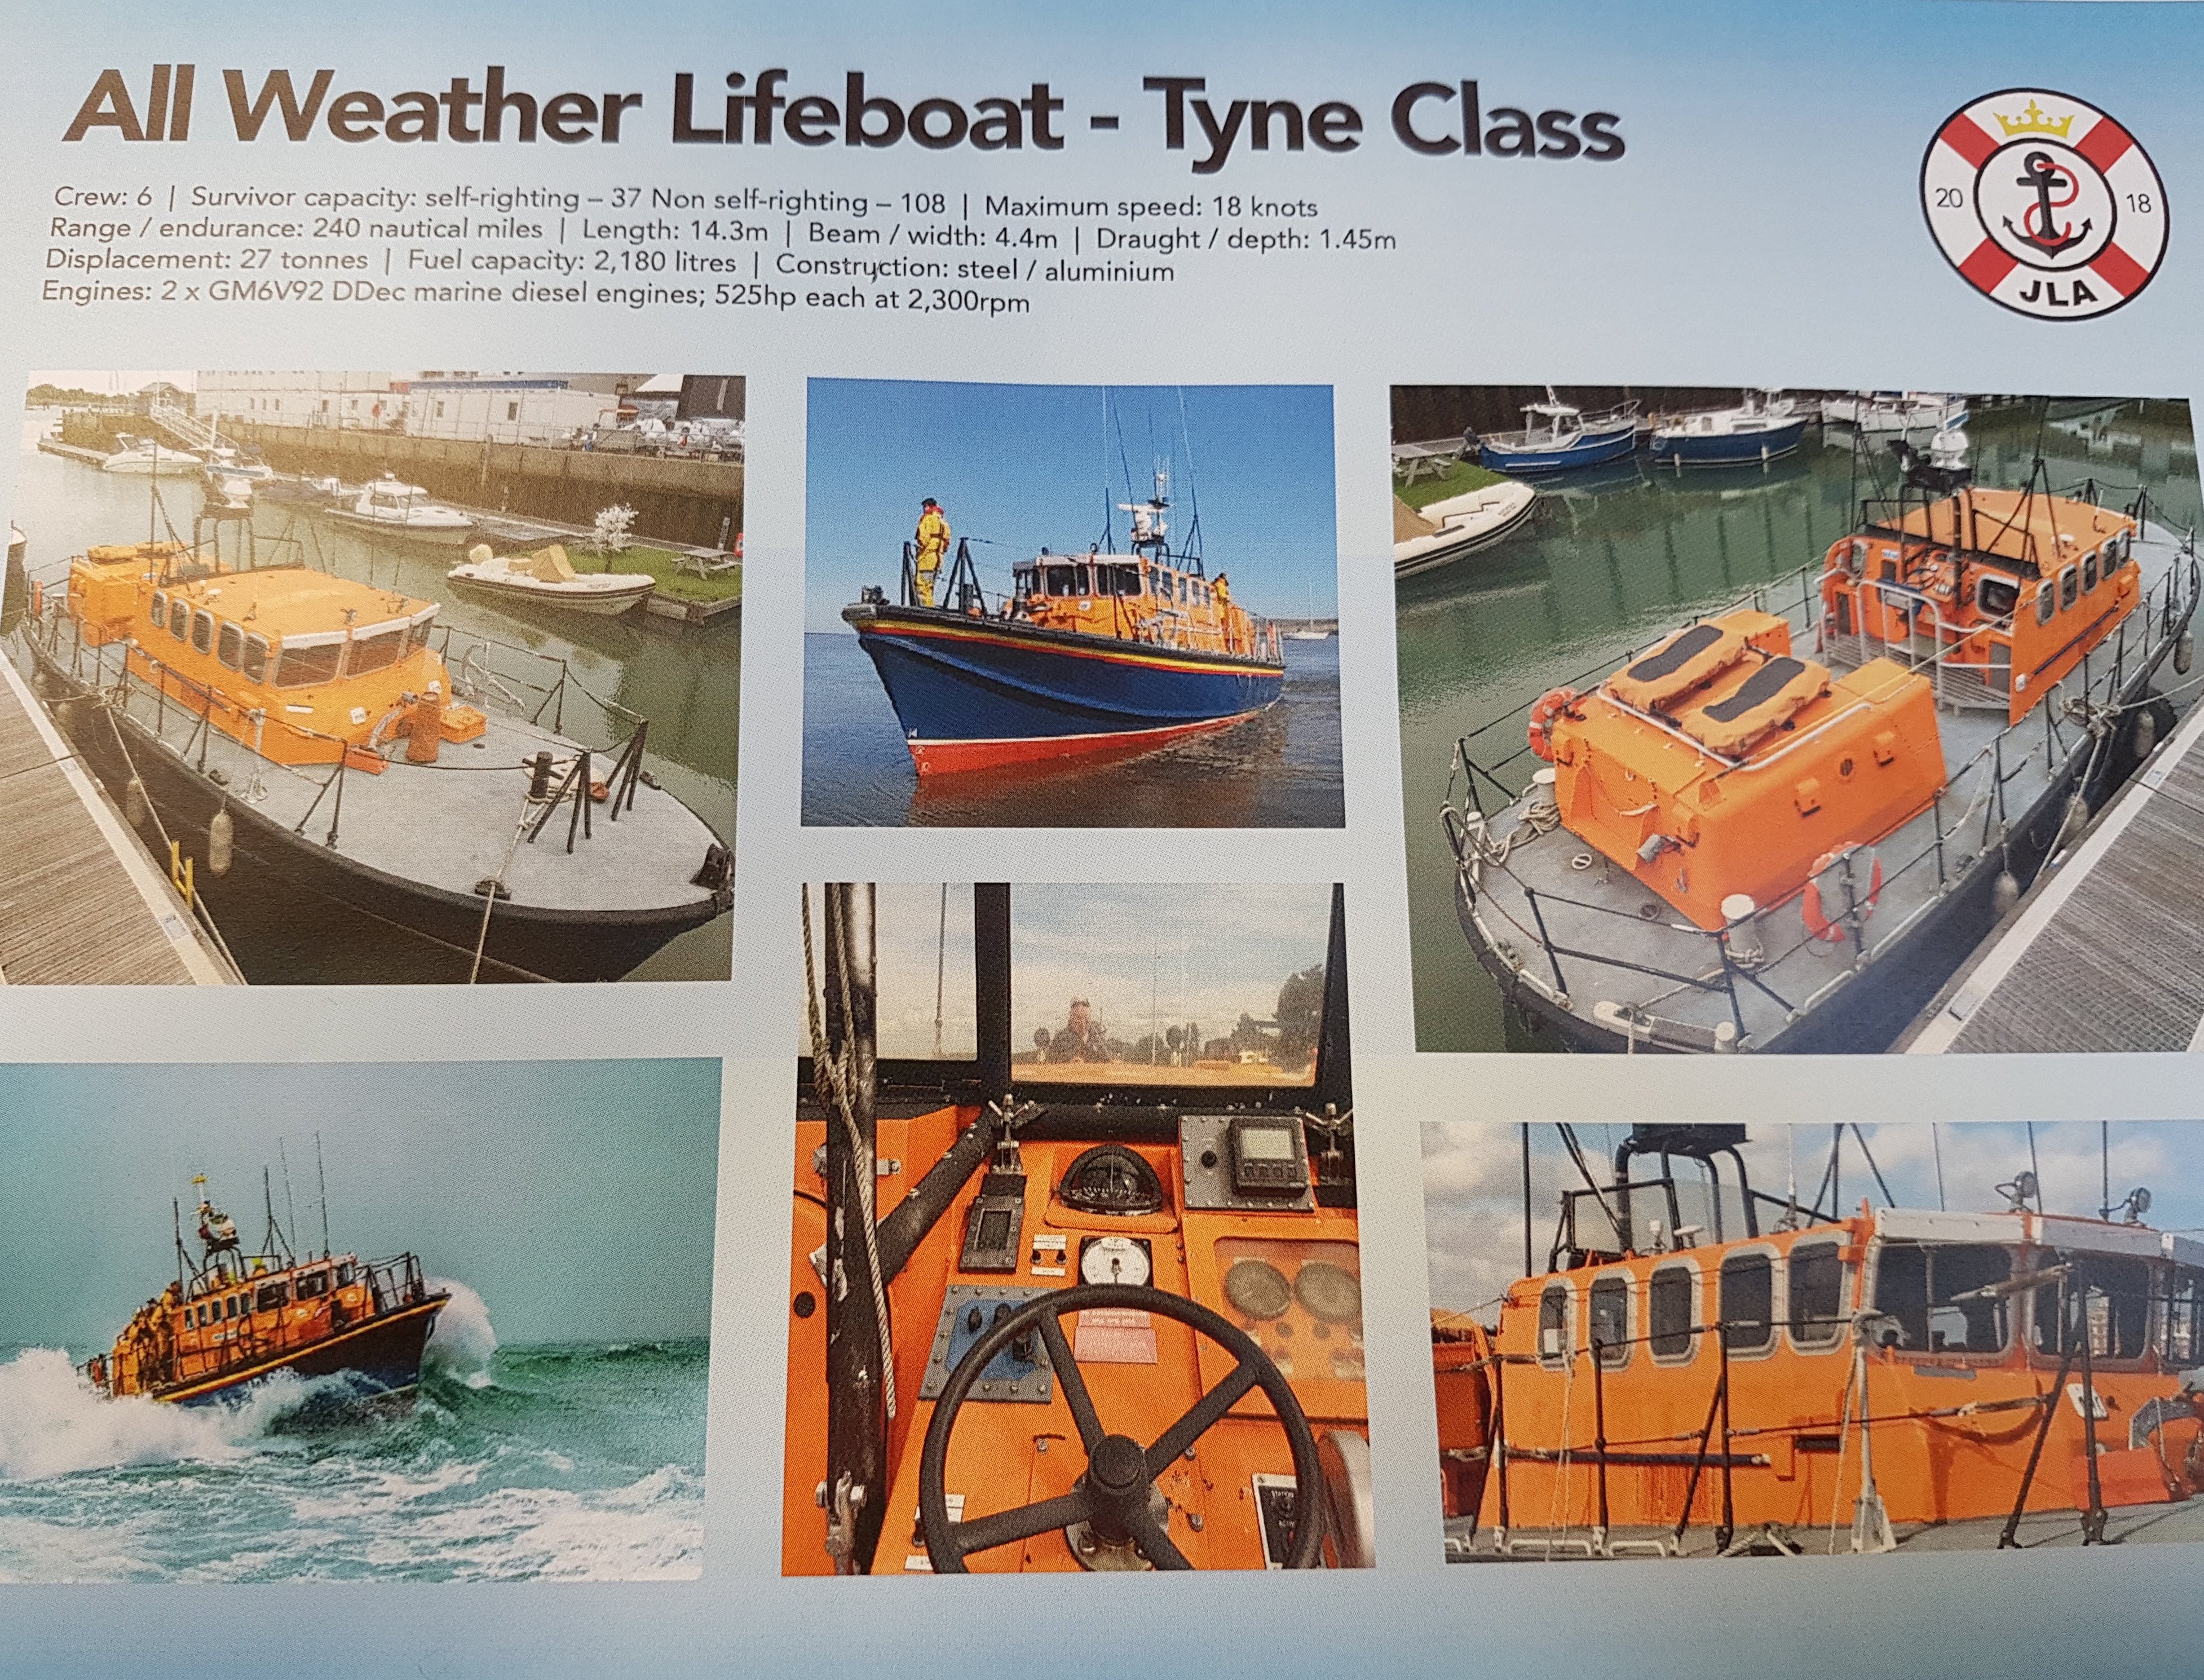 Tyne Class Boat JLA